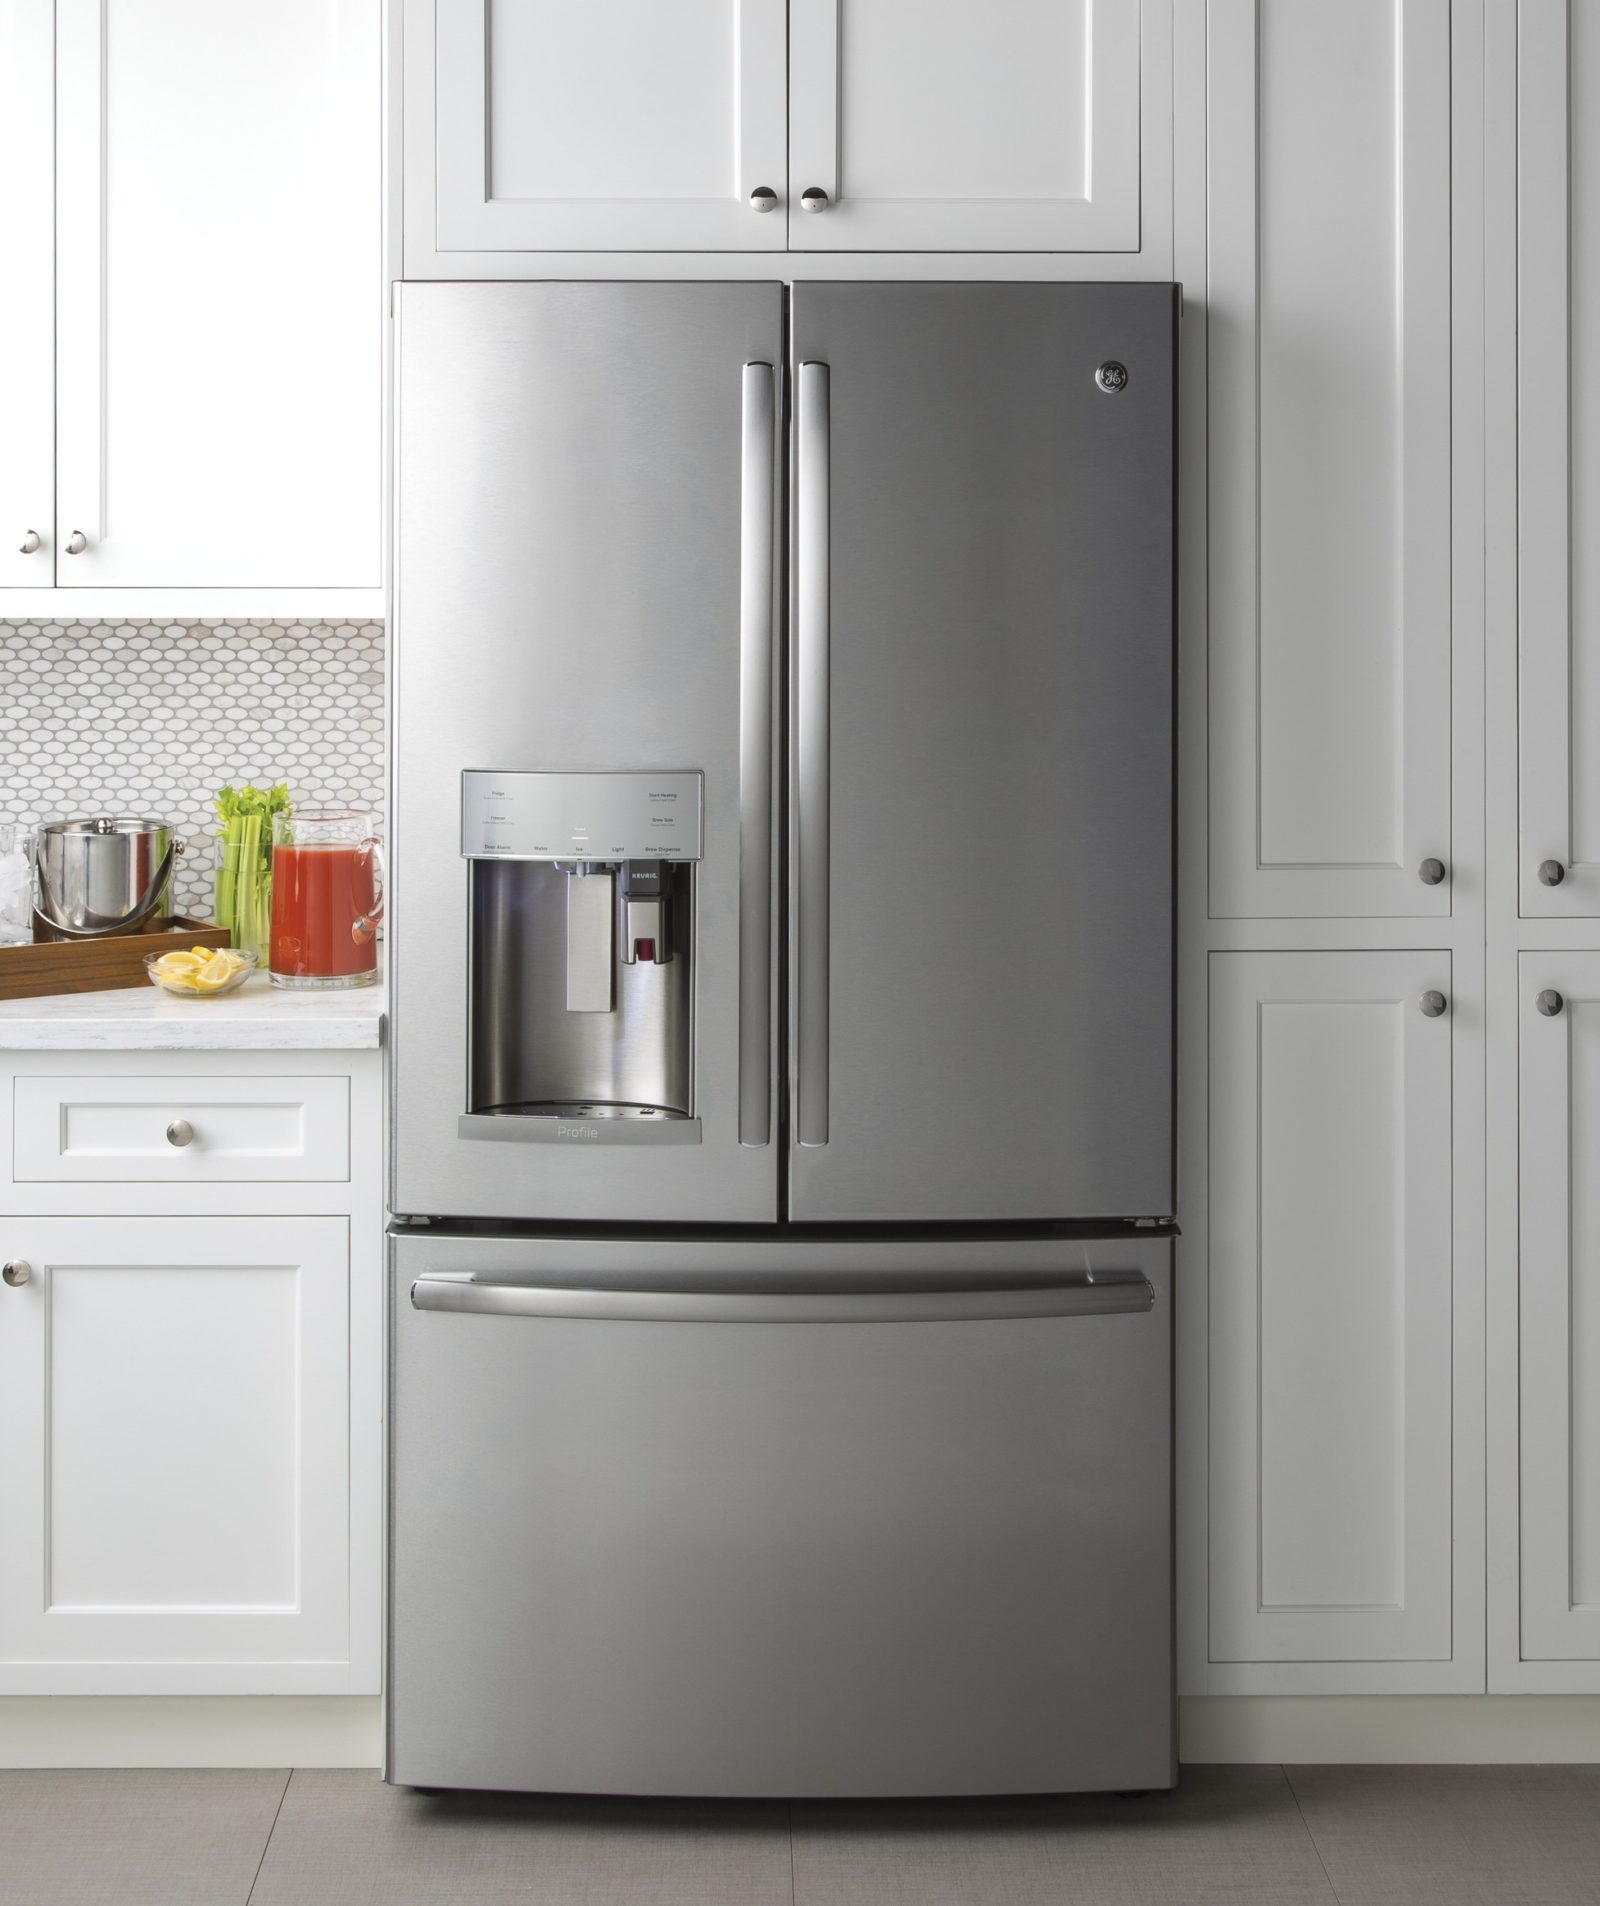 GE Profile Refrigerator Best Buy